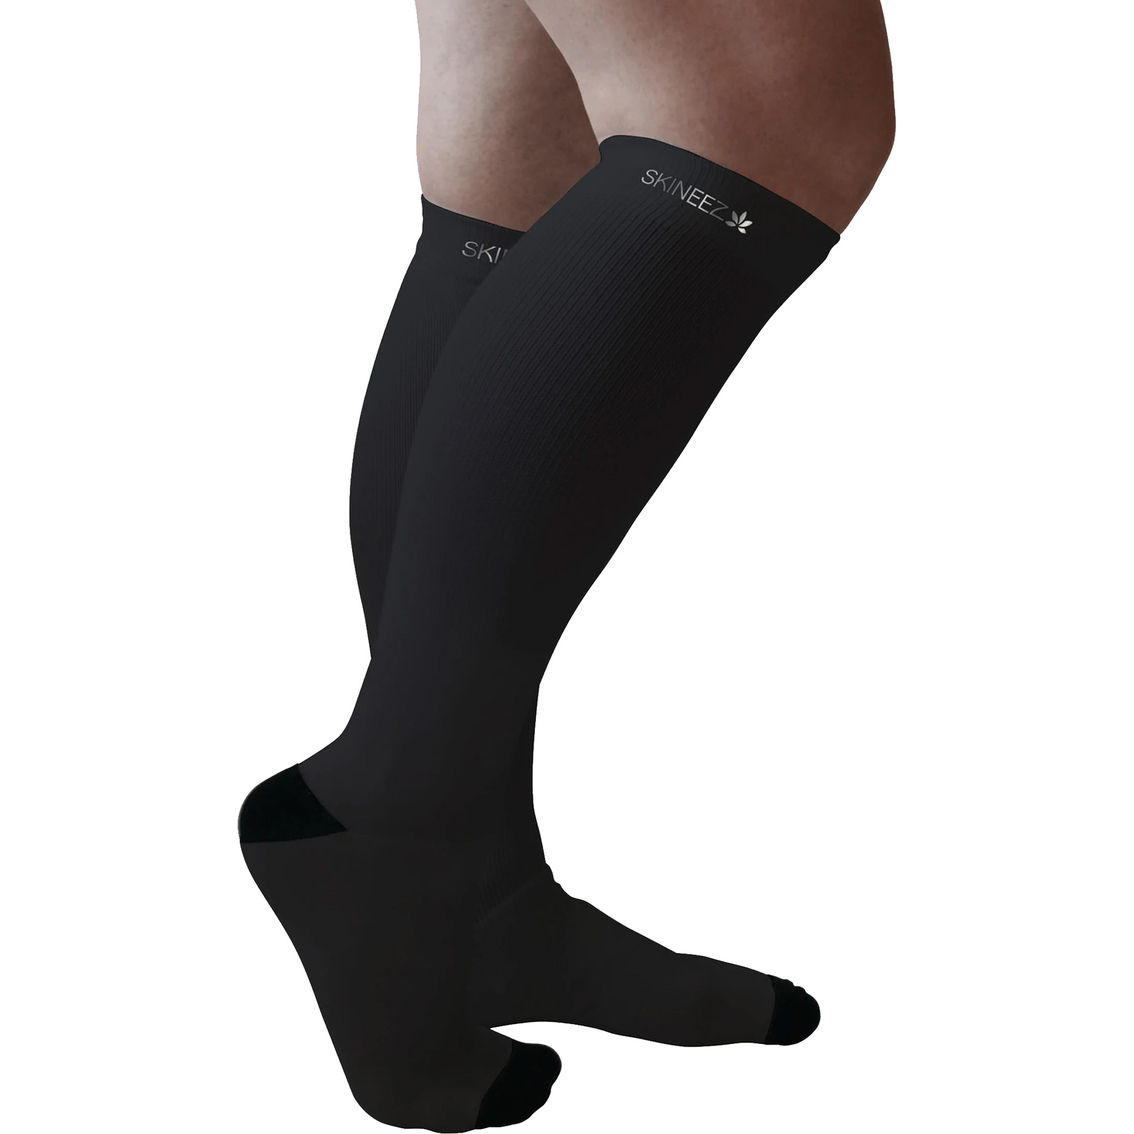 Skineez Workforce Compression Knee High Socks - Image 2 of 2